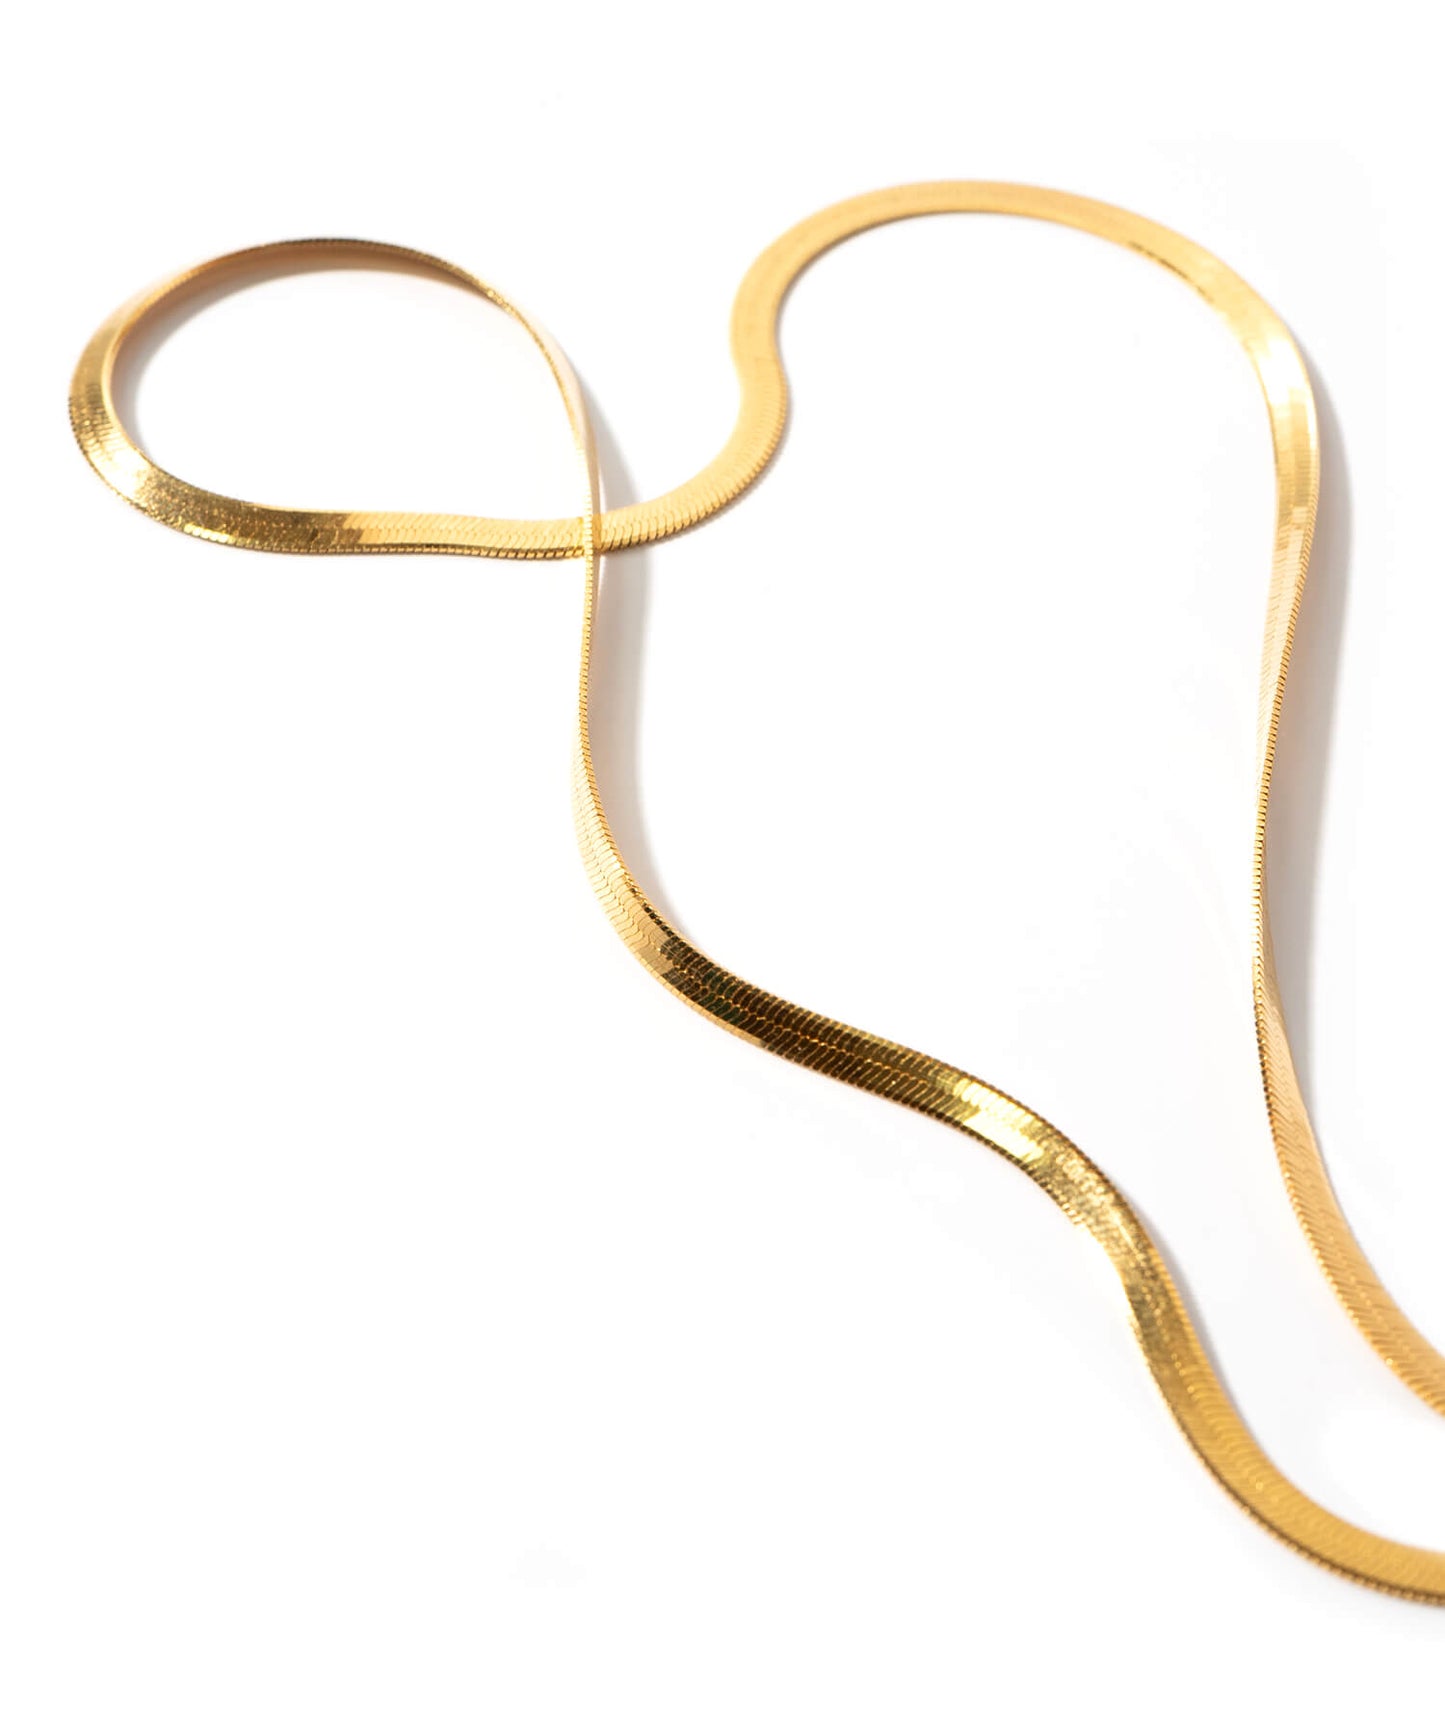 3mm Herringbone Necklace | ITER NECKLACE